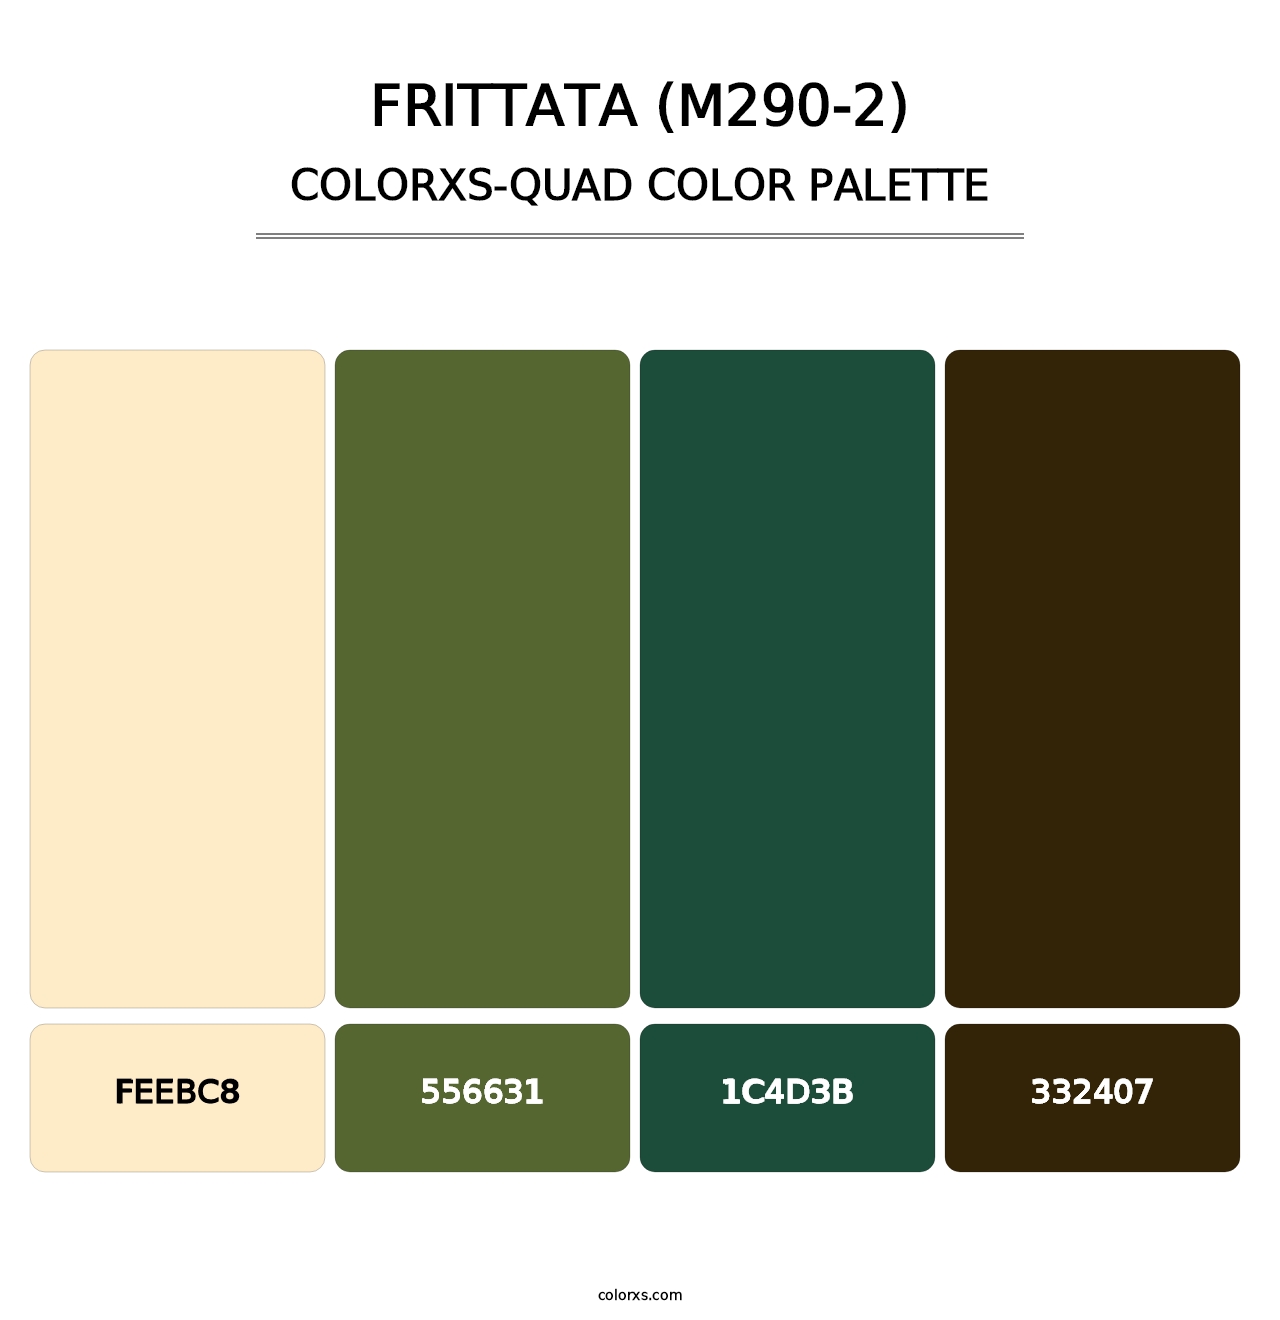 Frittata (M290-2) - Colorxs Quad Palette